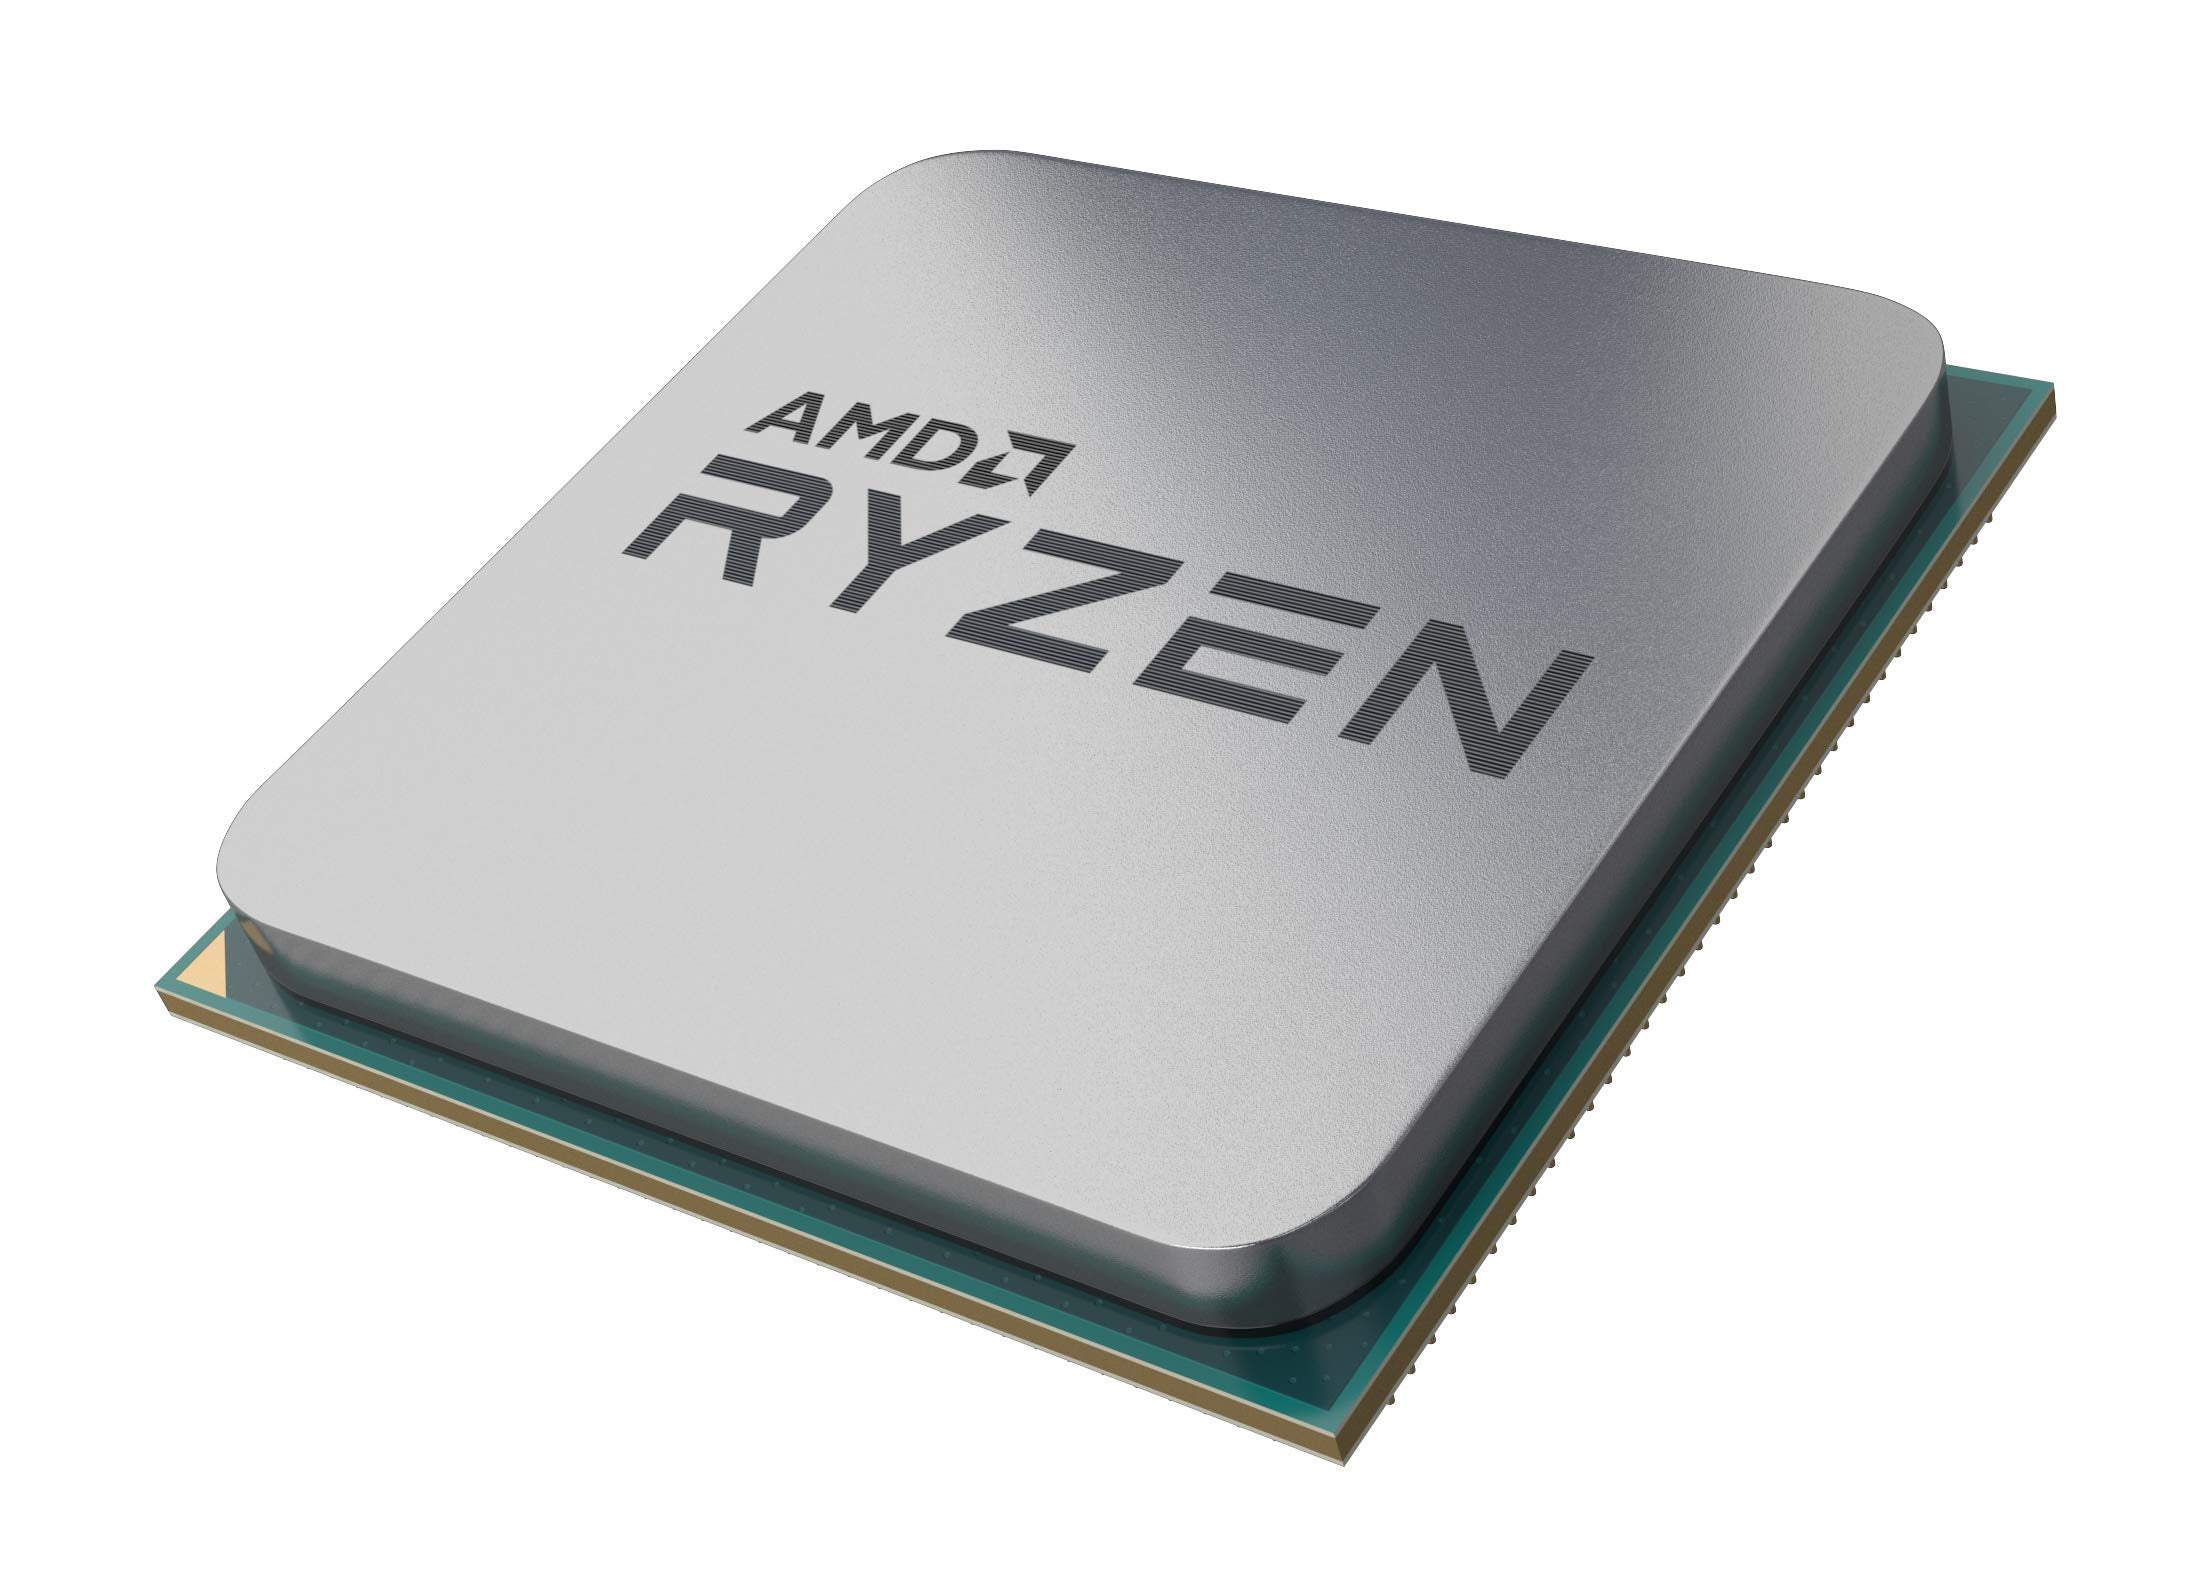 AMD YD2600BBAFBOX Ryzen 5 2600 processor Retail Package with Wraith Stealth Cooler